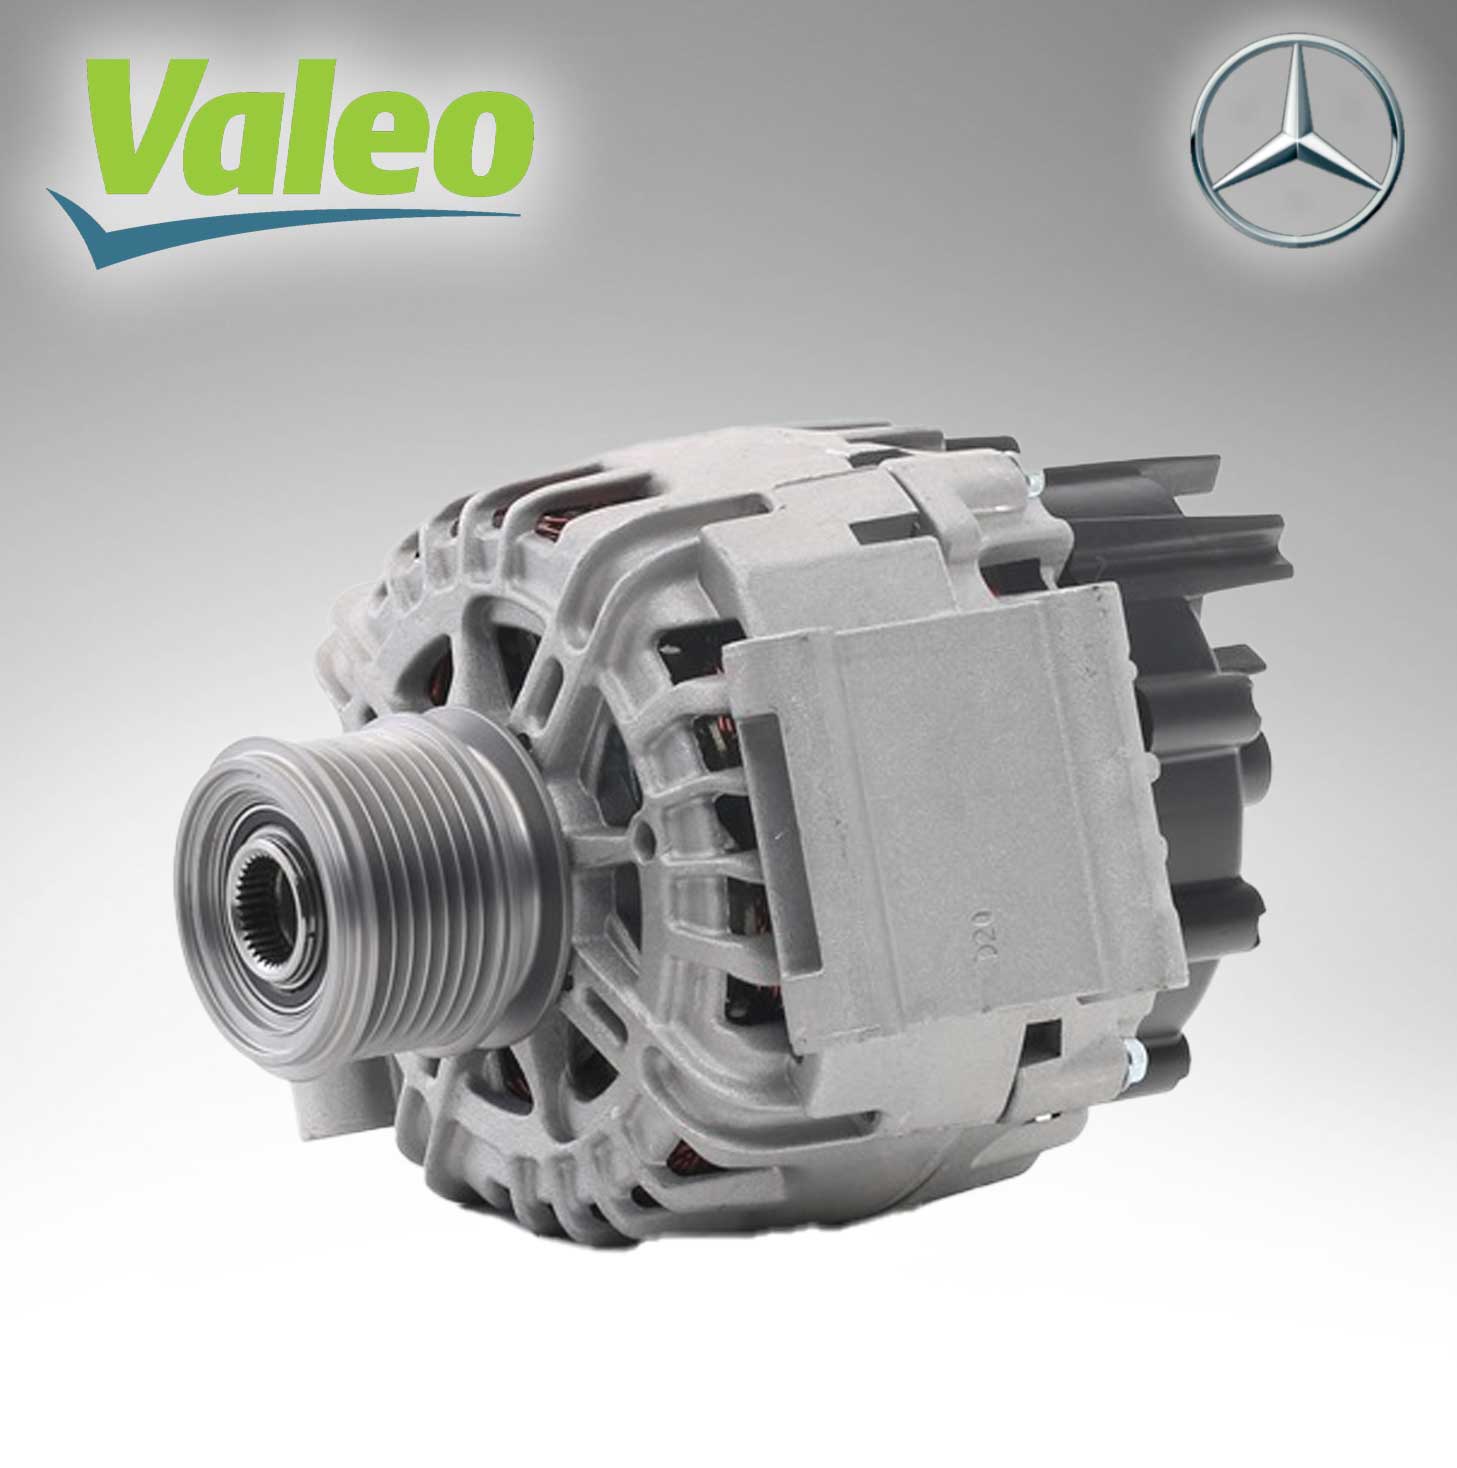 VALEO Alternator 439611 For Mercedes Benz 2711541402